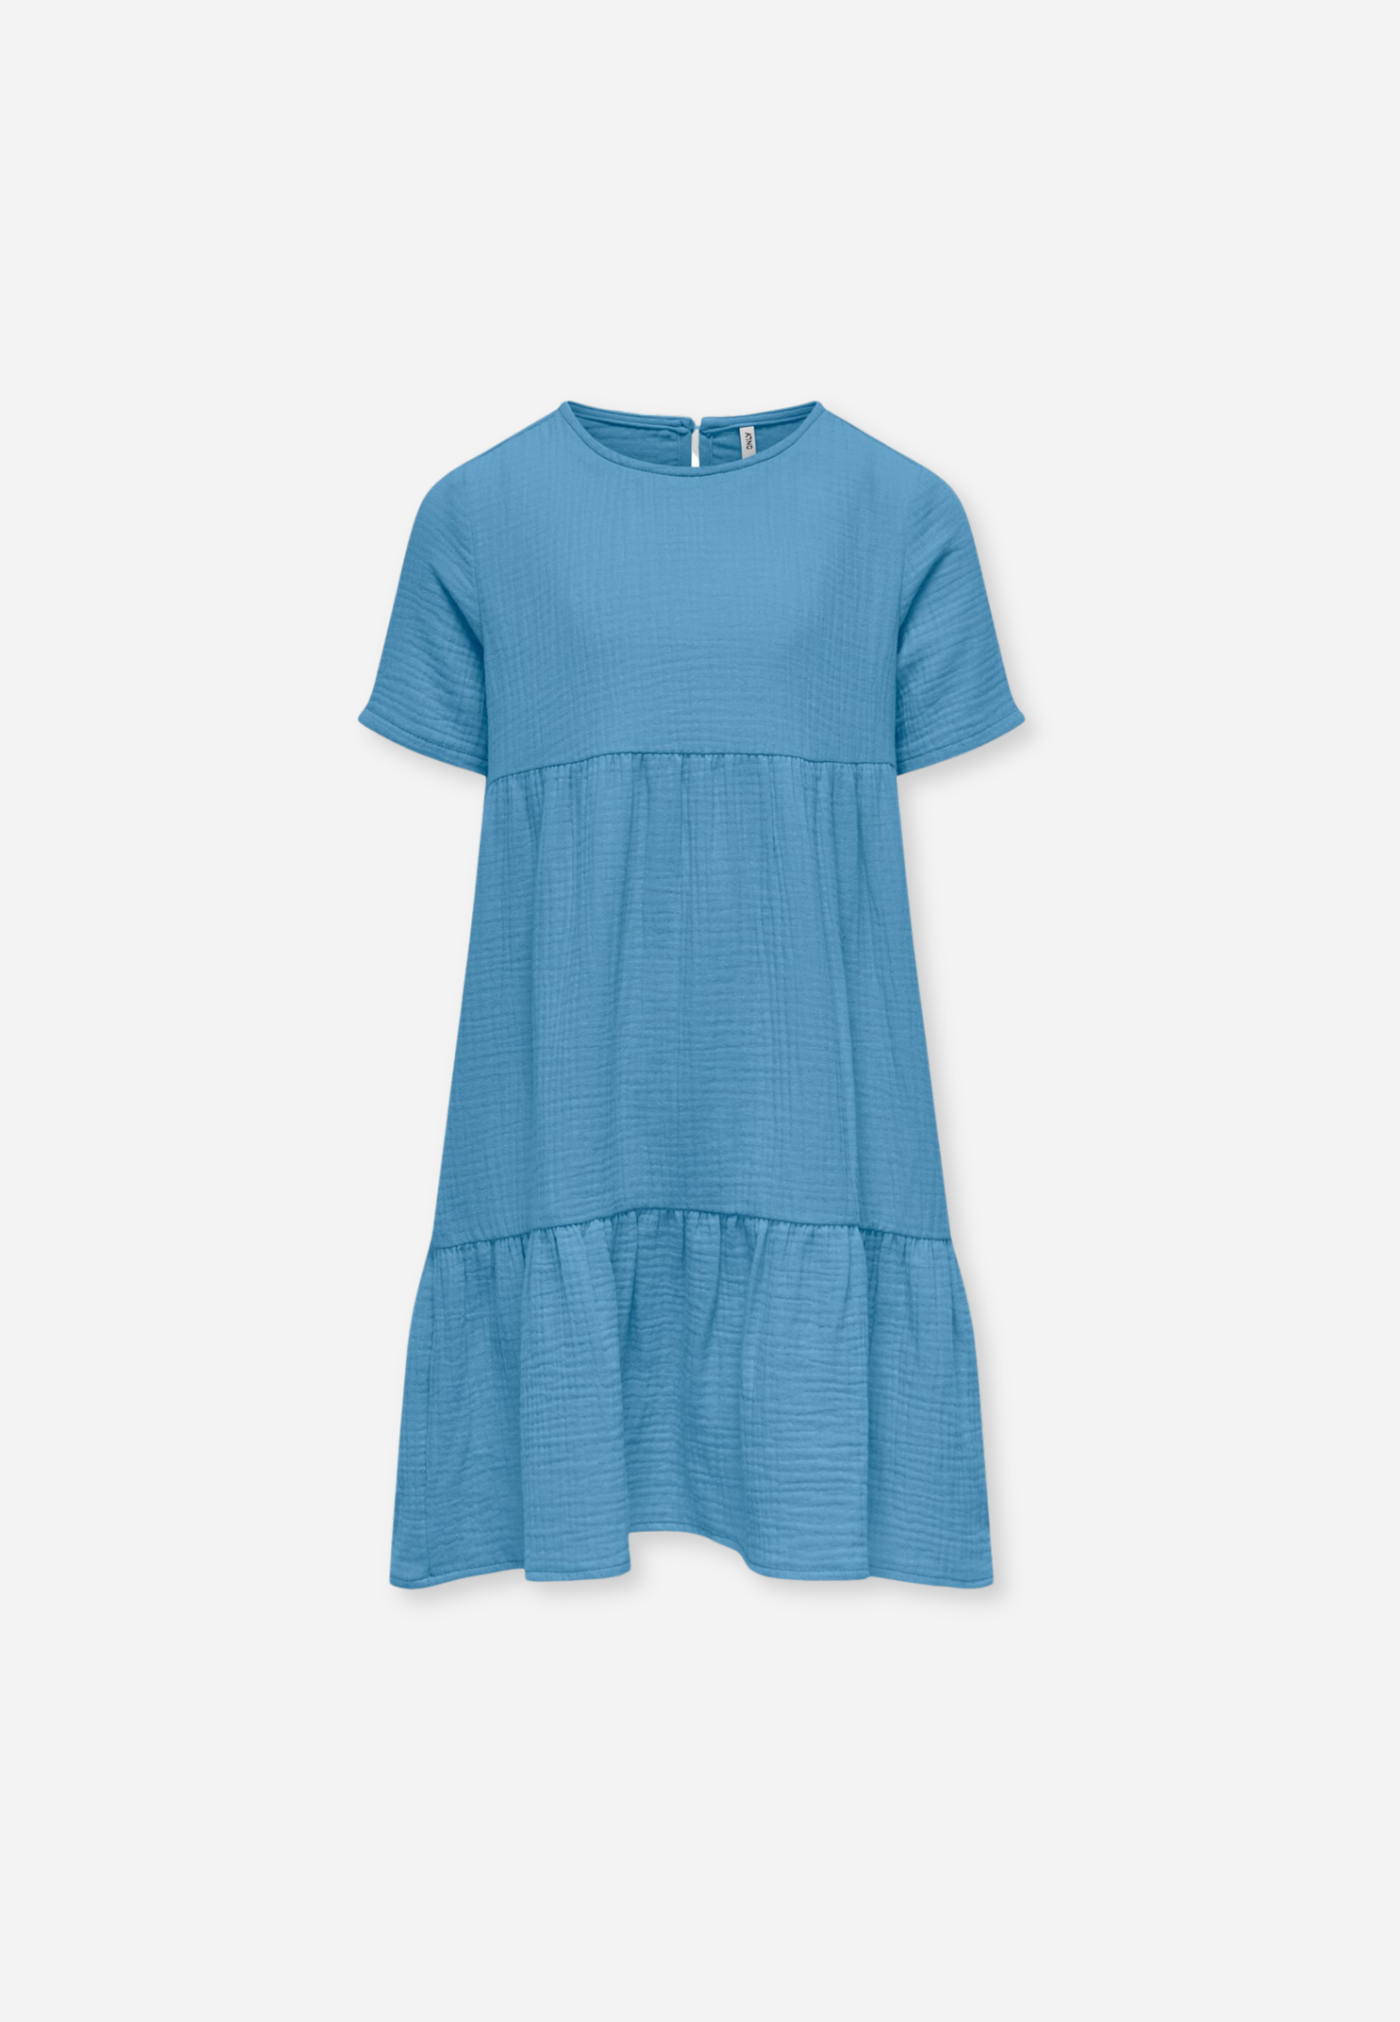 KOGTHYRA S/S DRESS - BLISSFUL BLUE